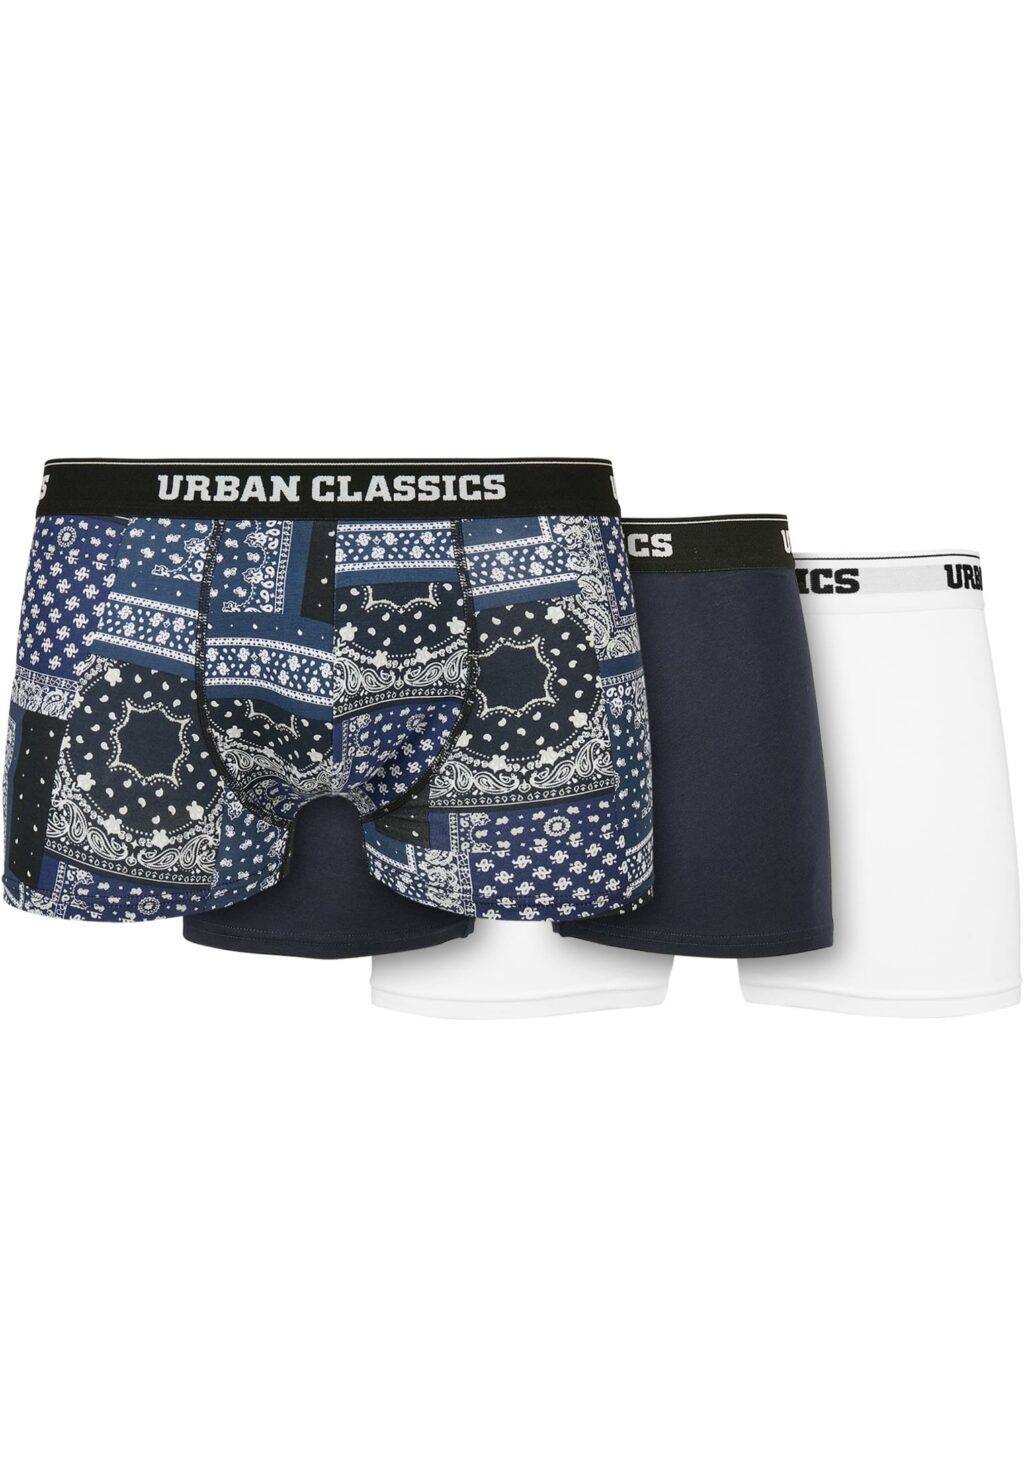 Urban Classics Organic Boxer Shorts 3-Pack bandana navy+navy+white TB3838